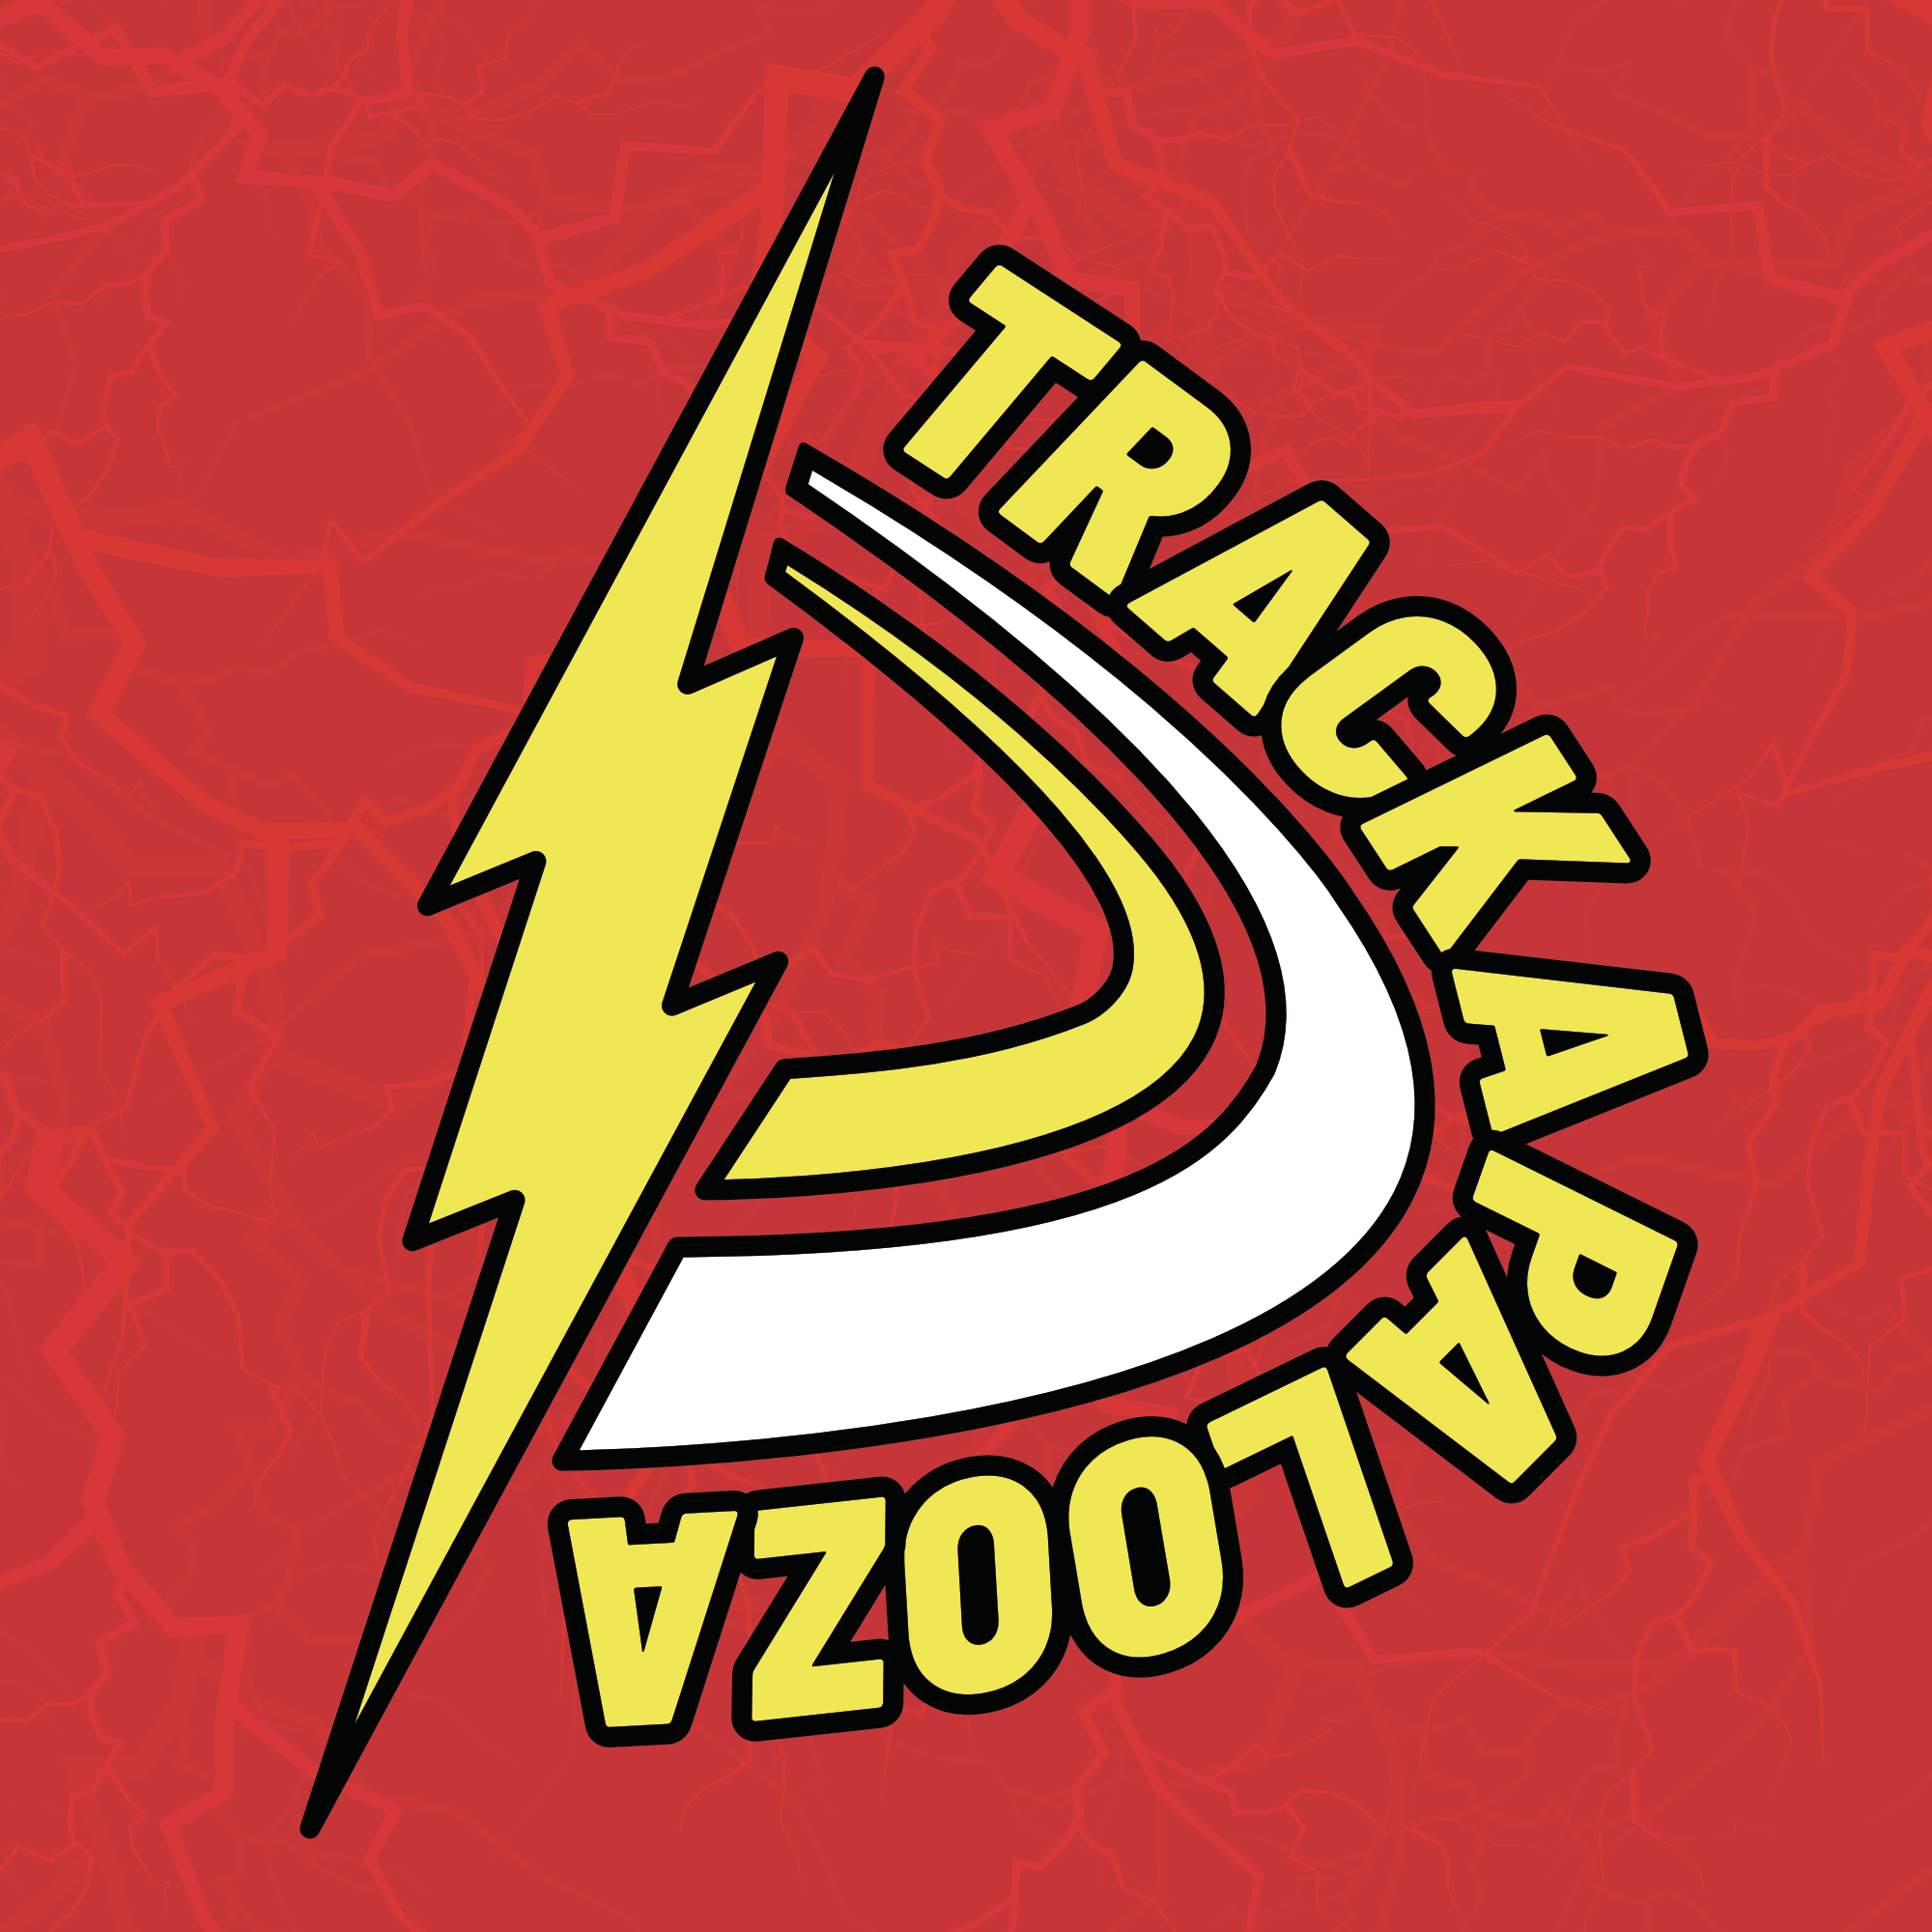 Trackpalooza-square-logo-1000x1000